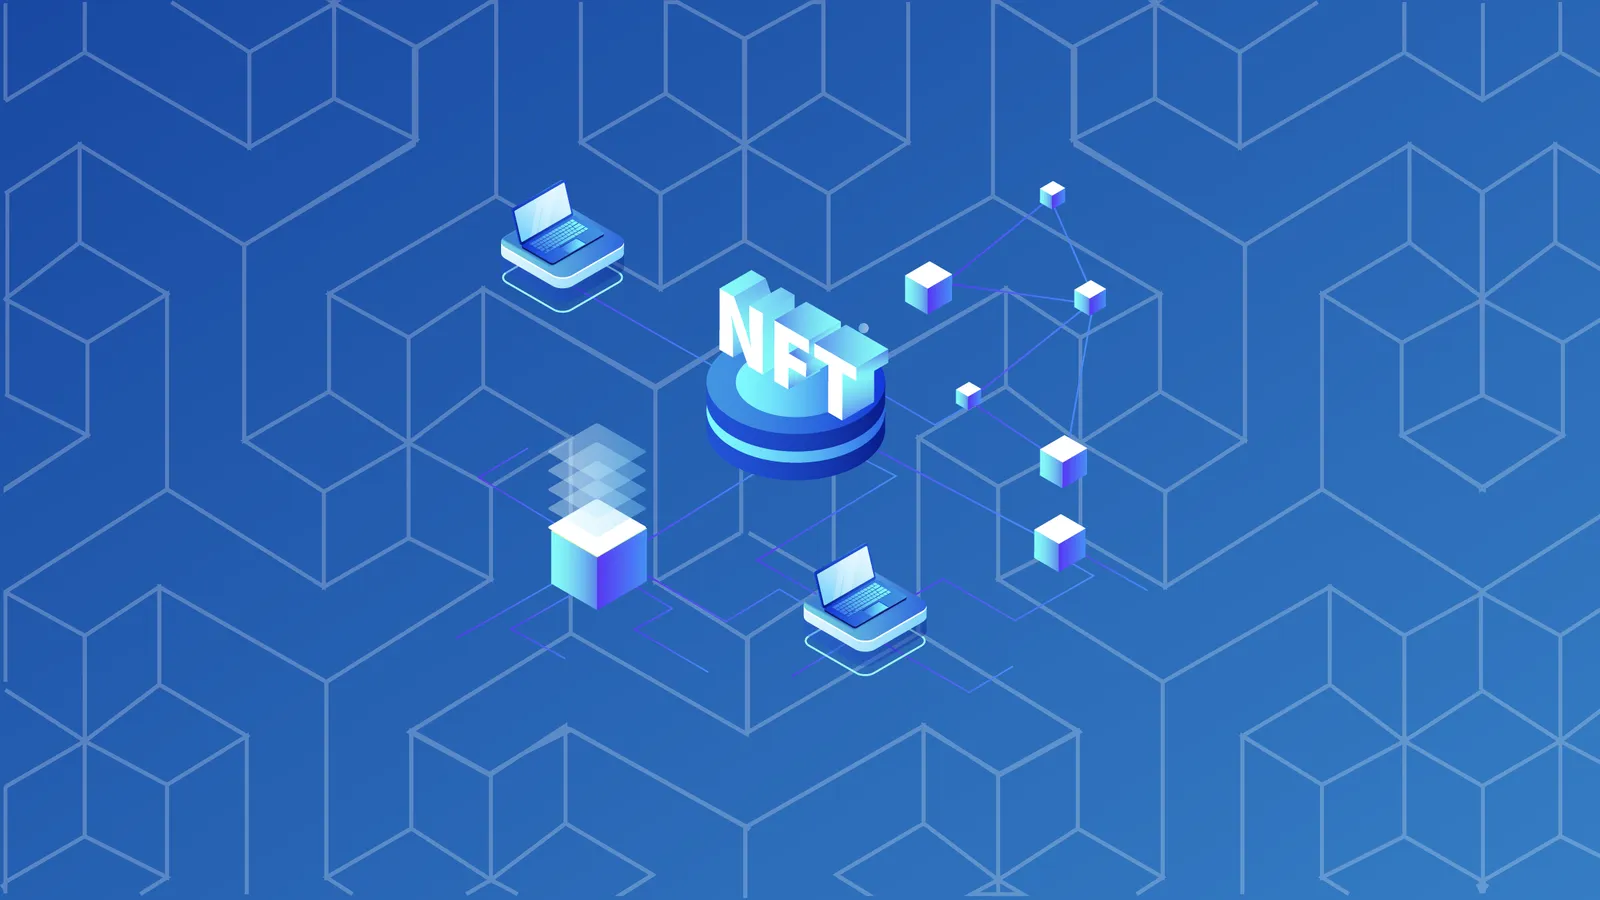 web3 and nft networked devices c. Rodrigo Martinez/Decrypt 2022